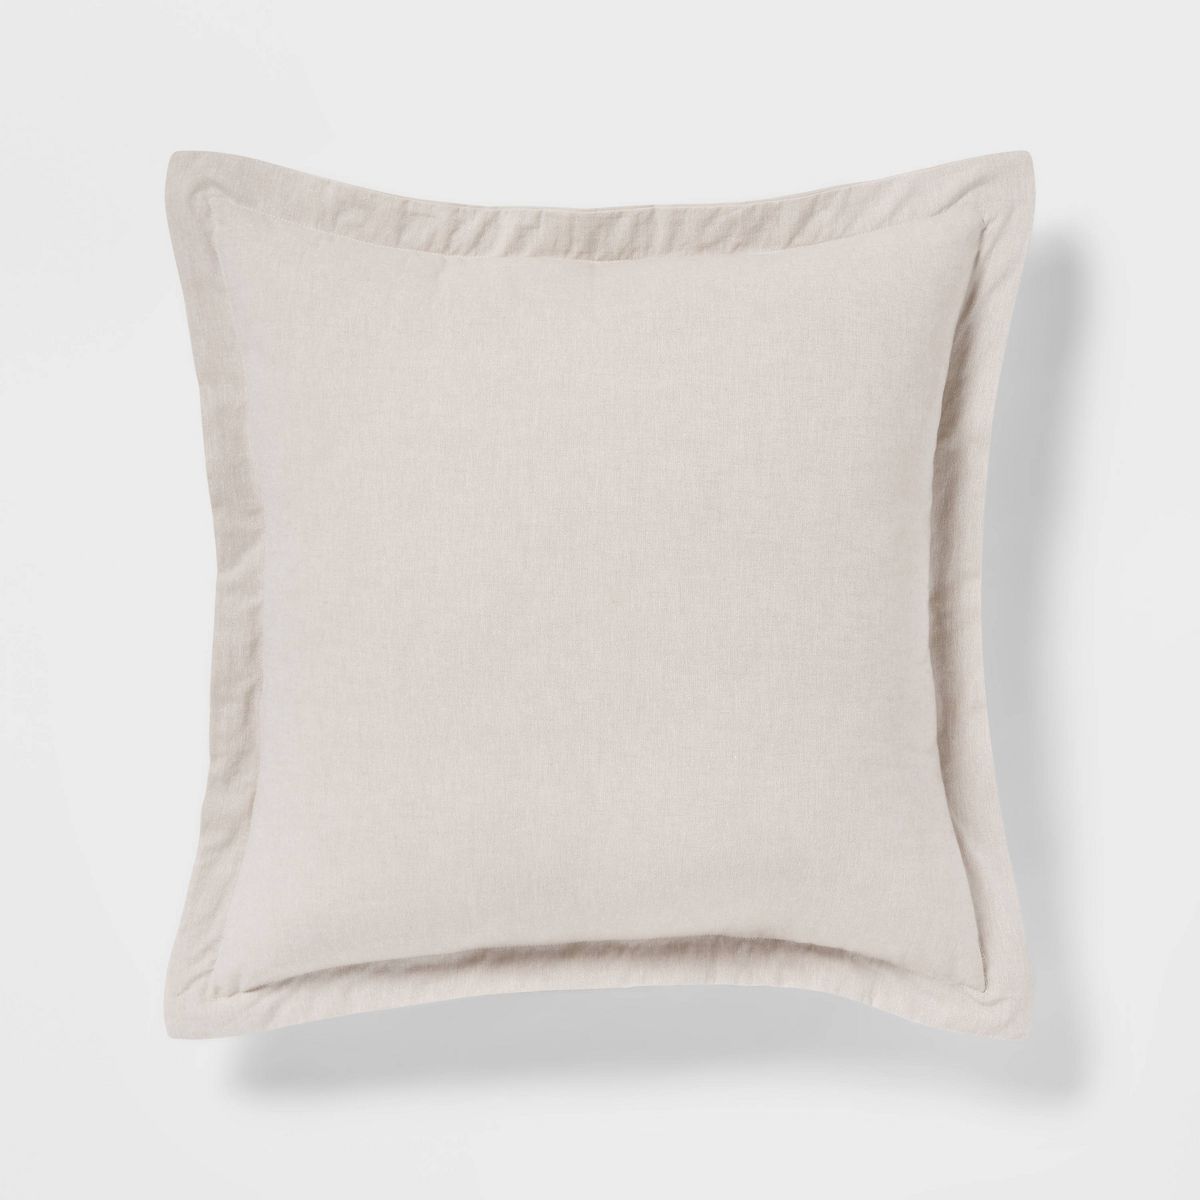 Euro Cotton Linen Blend Chambray Decorative Throw Pillow Natural - Threshold™ | Target